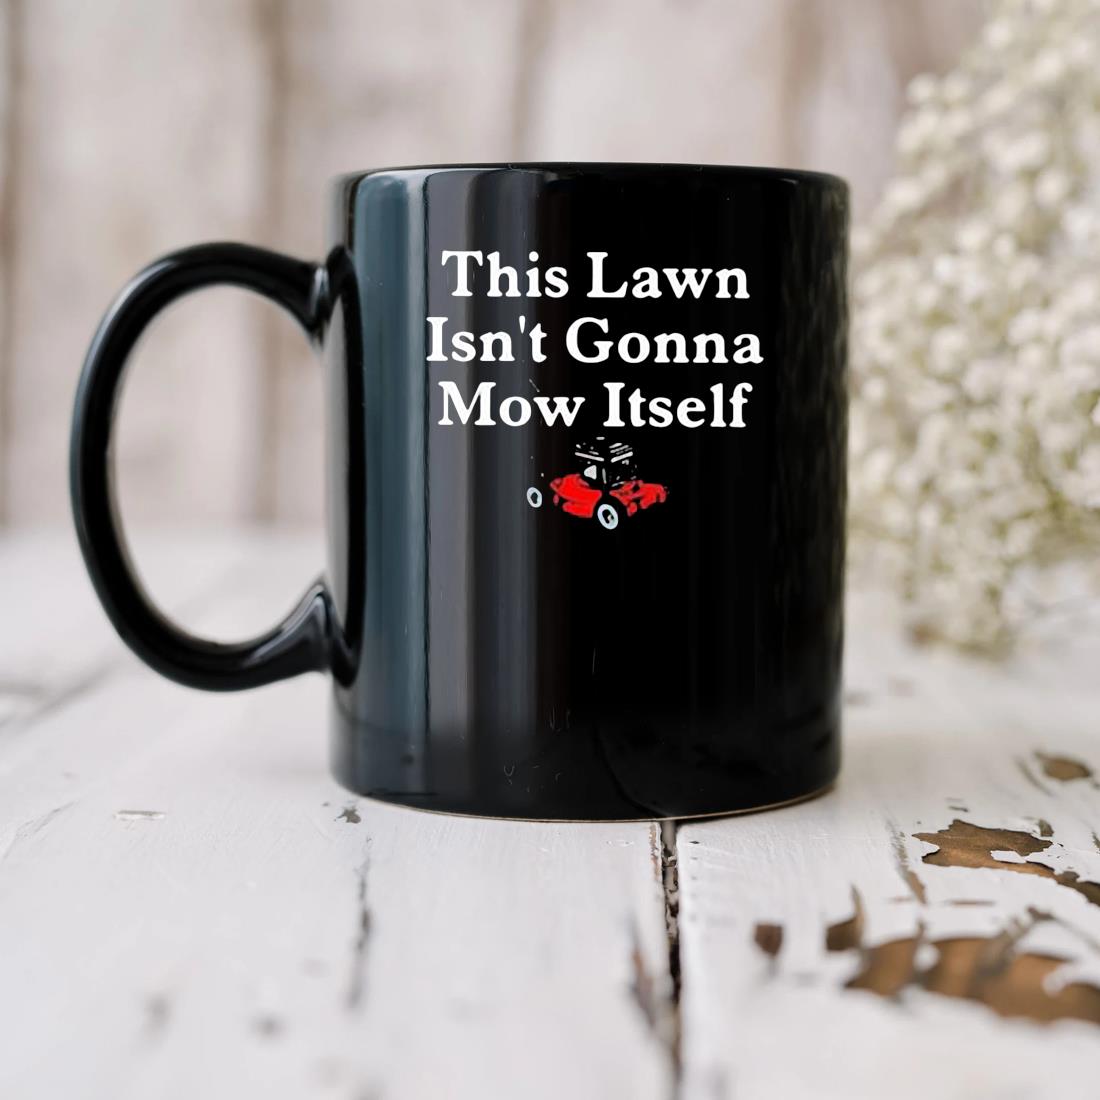 This Lawn Isn't Gonna Mow Itself Mug